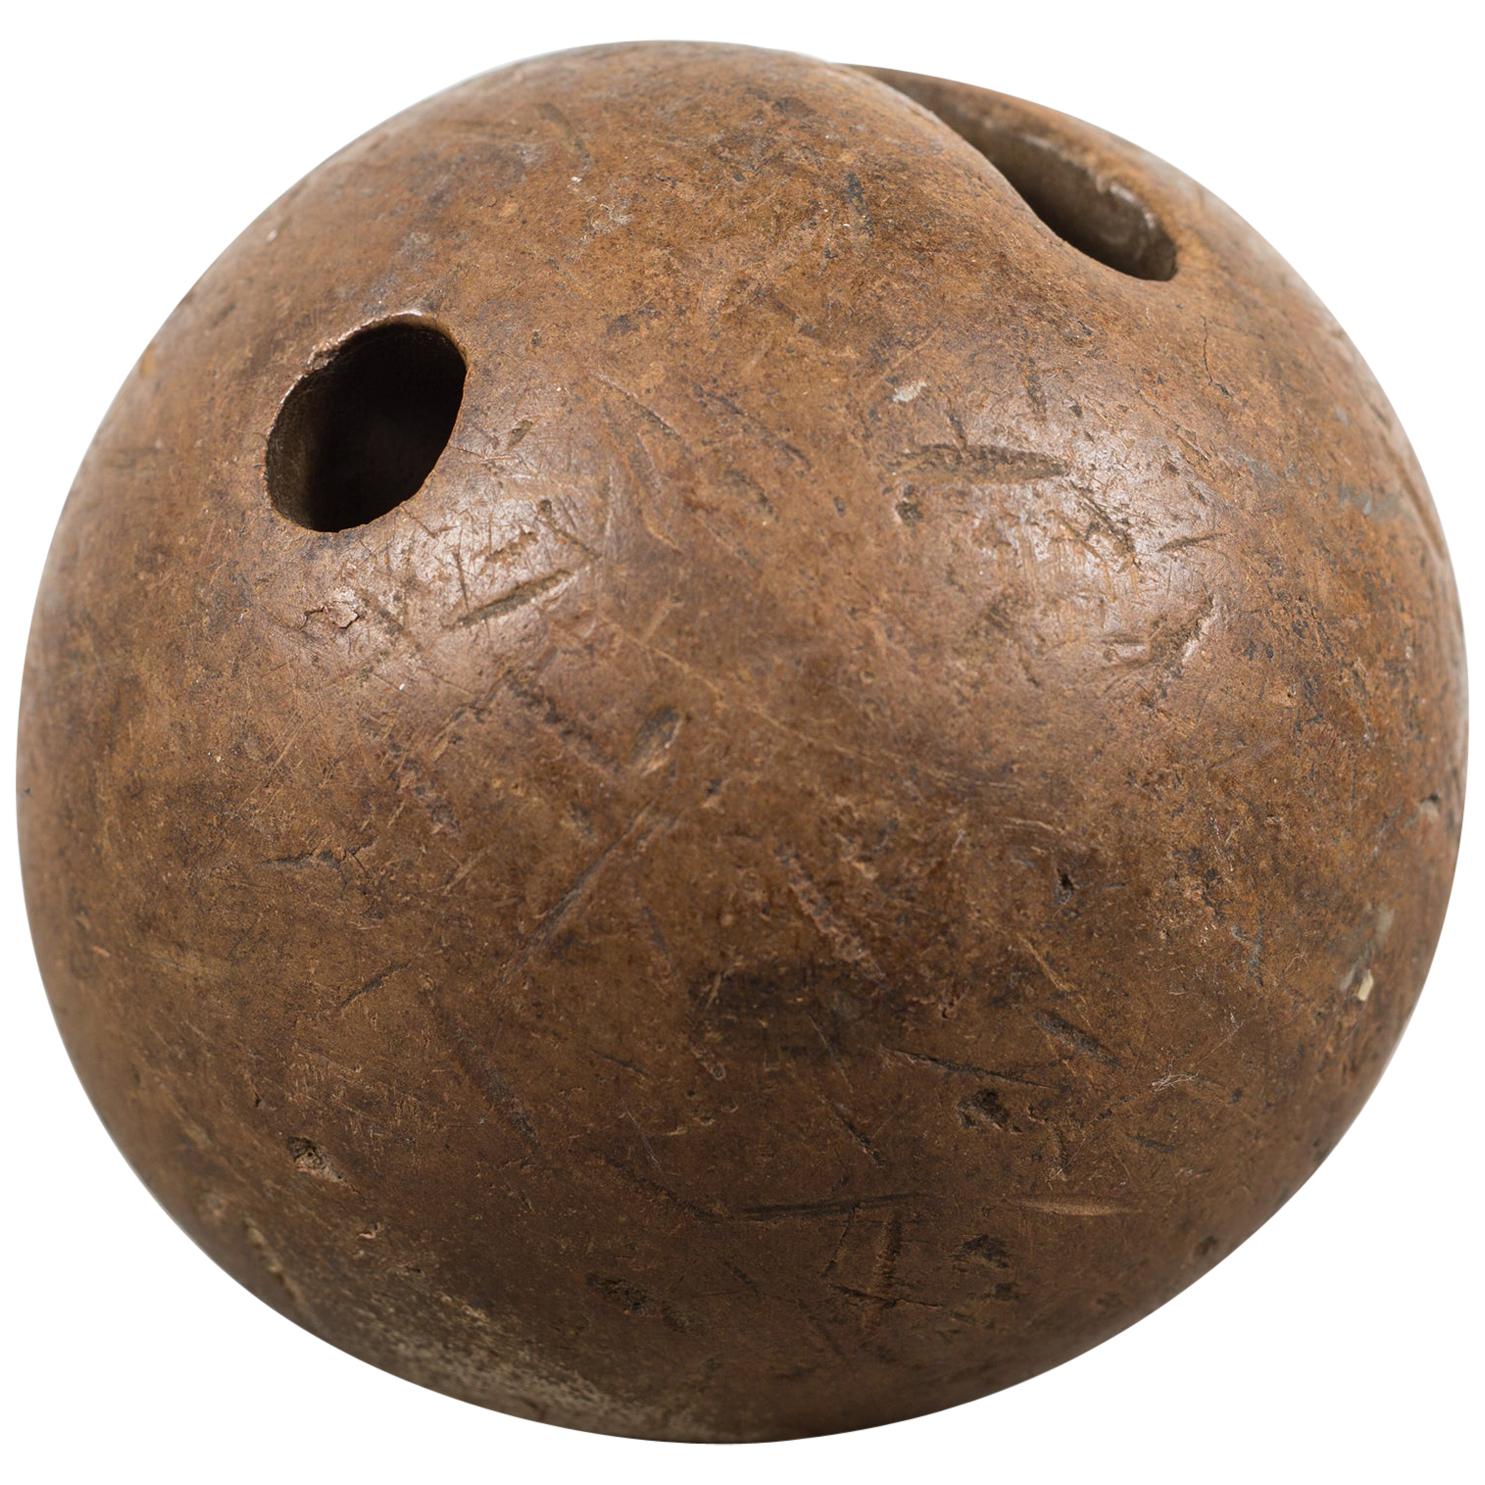 19th Century Hand Carved Lingum Vitae Bowling Ball, circa 1800s